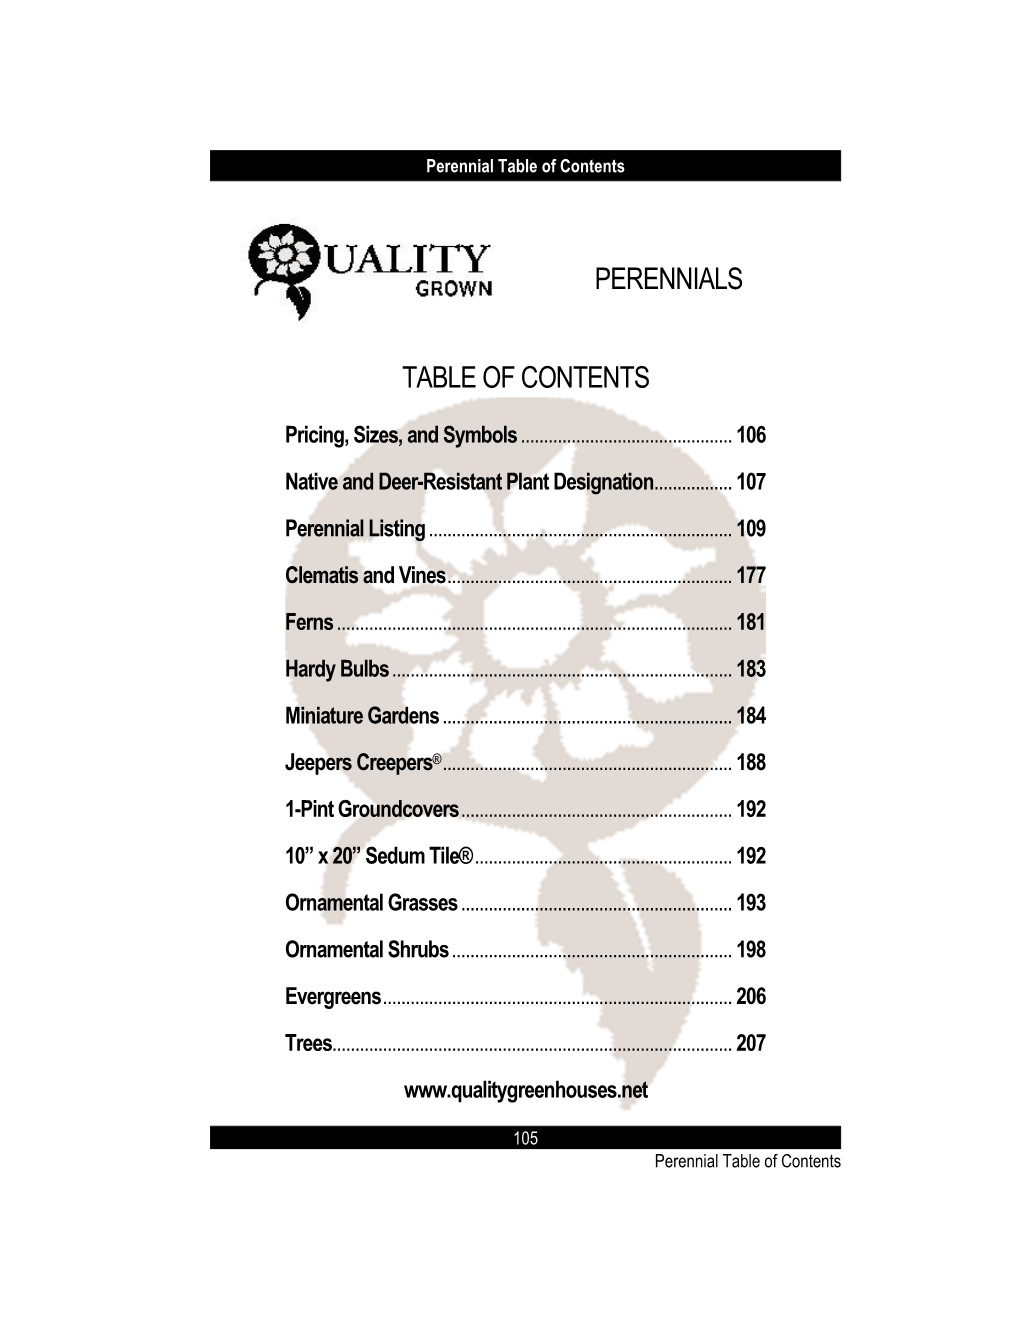 Perennials Table of Contents